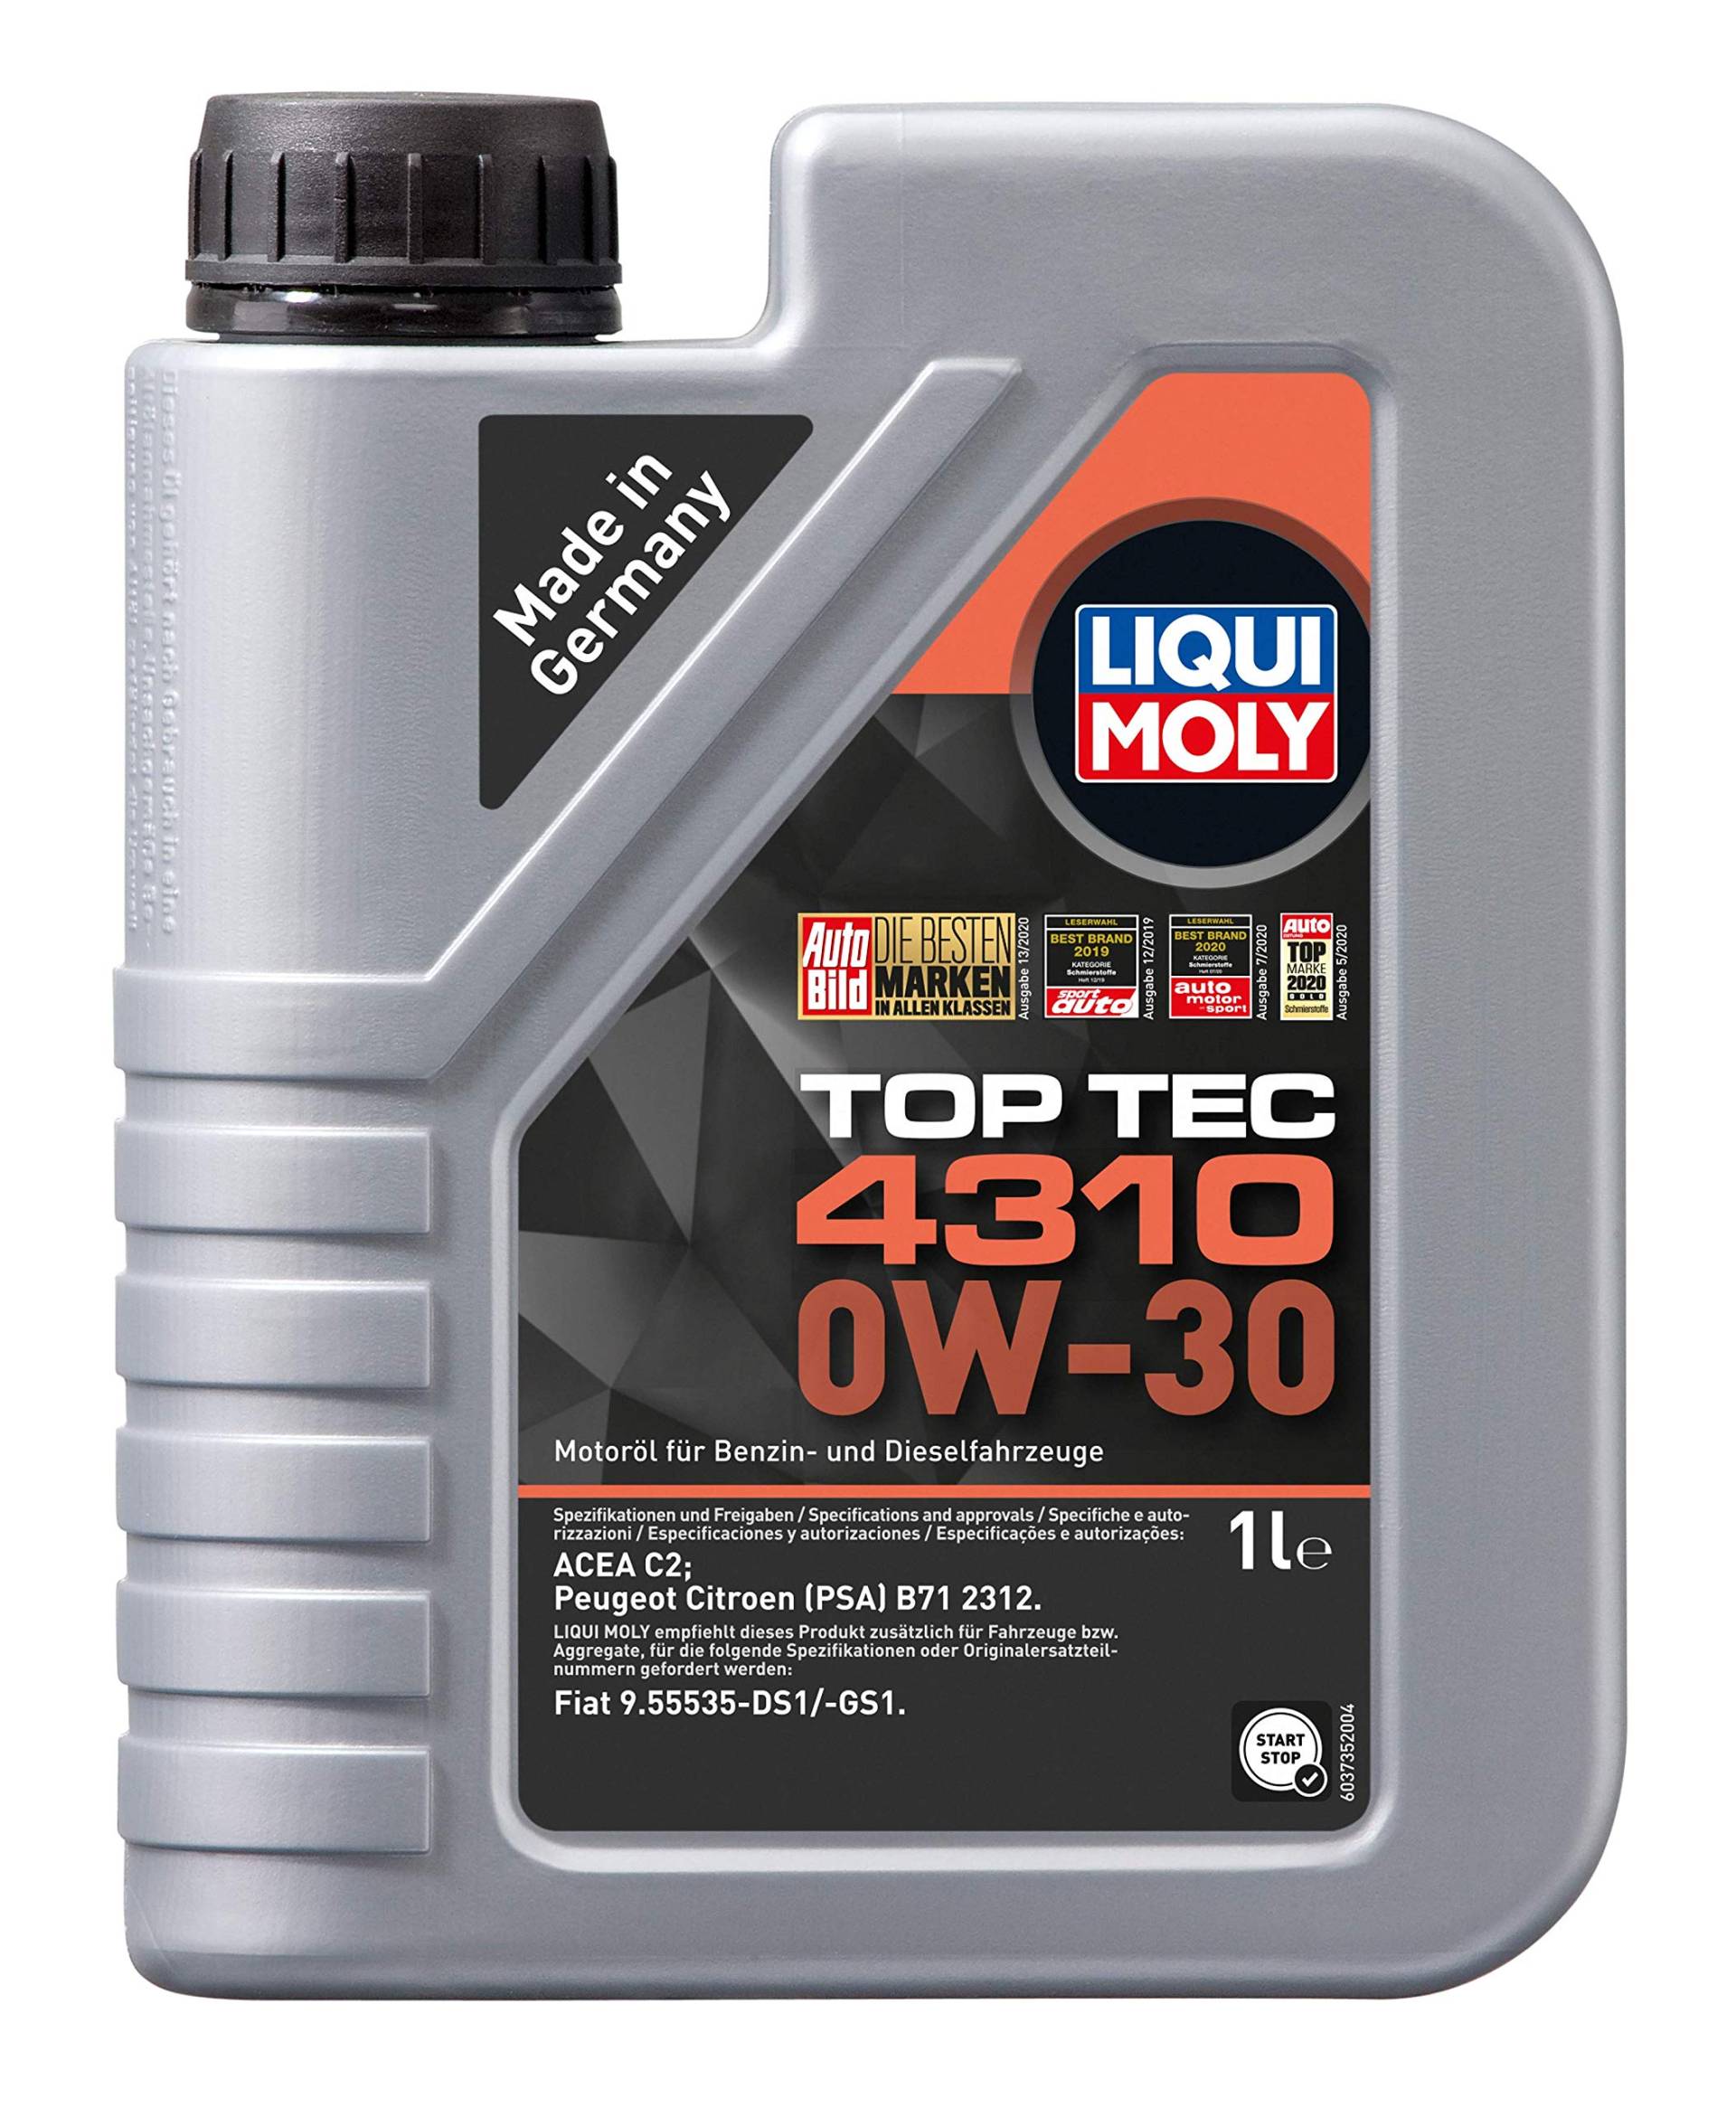 LIQUI MOLY Top Tec 4310 0W-30 | 1 L | Synthesetechnologie Motoröl | Art.-Nr.: 3735 von Liqui Moly